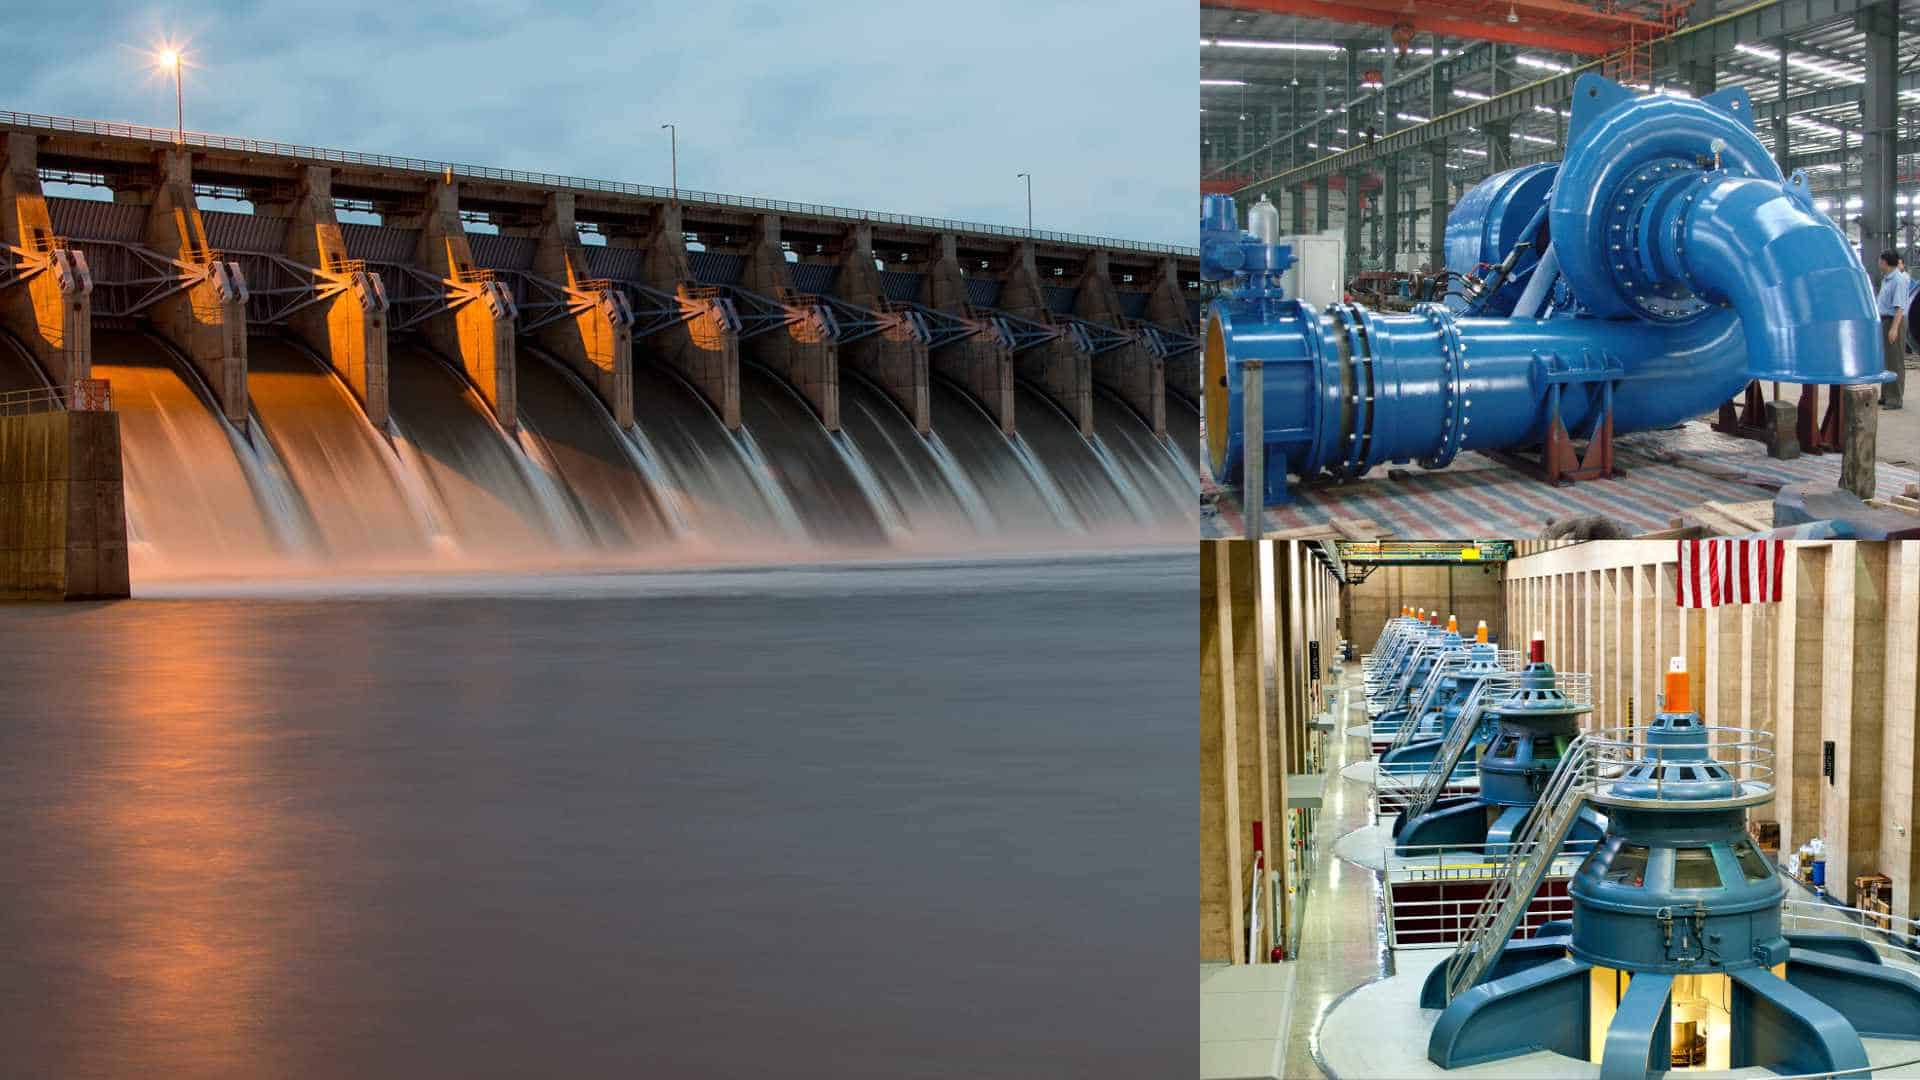 hydroelectricity presentation